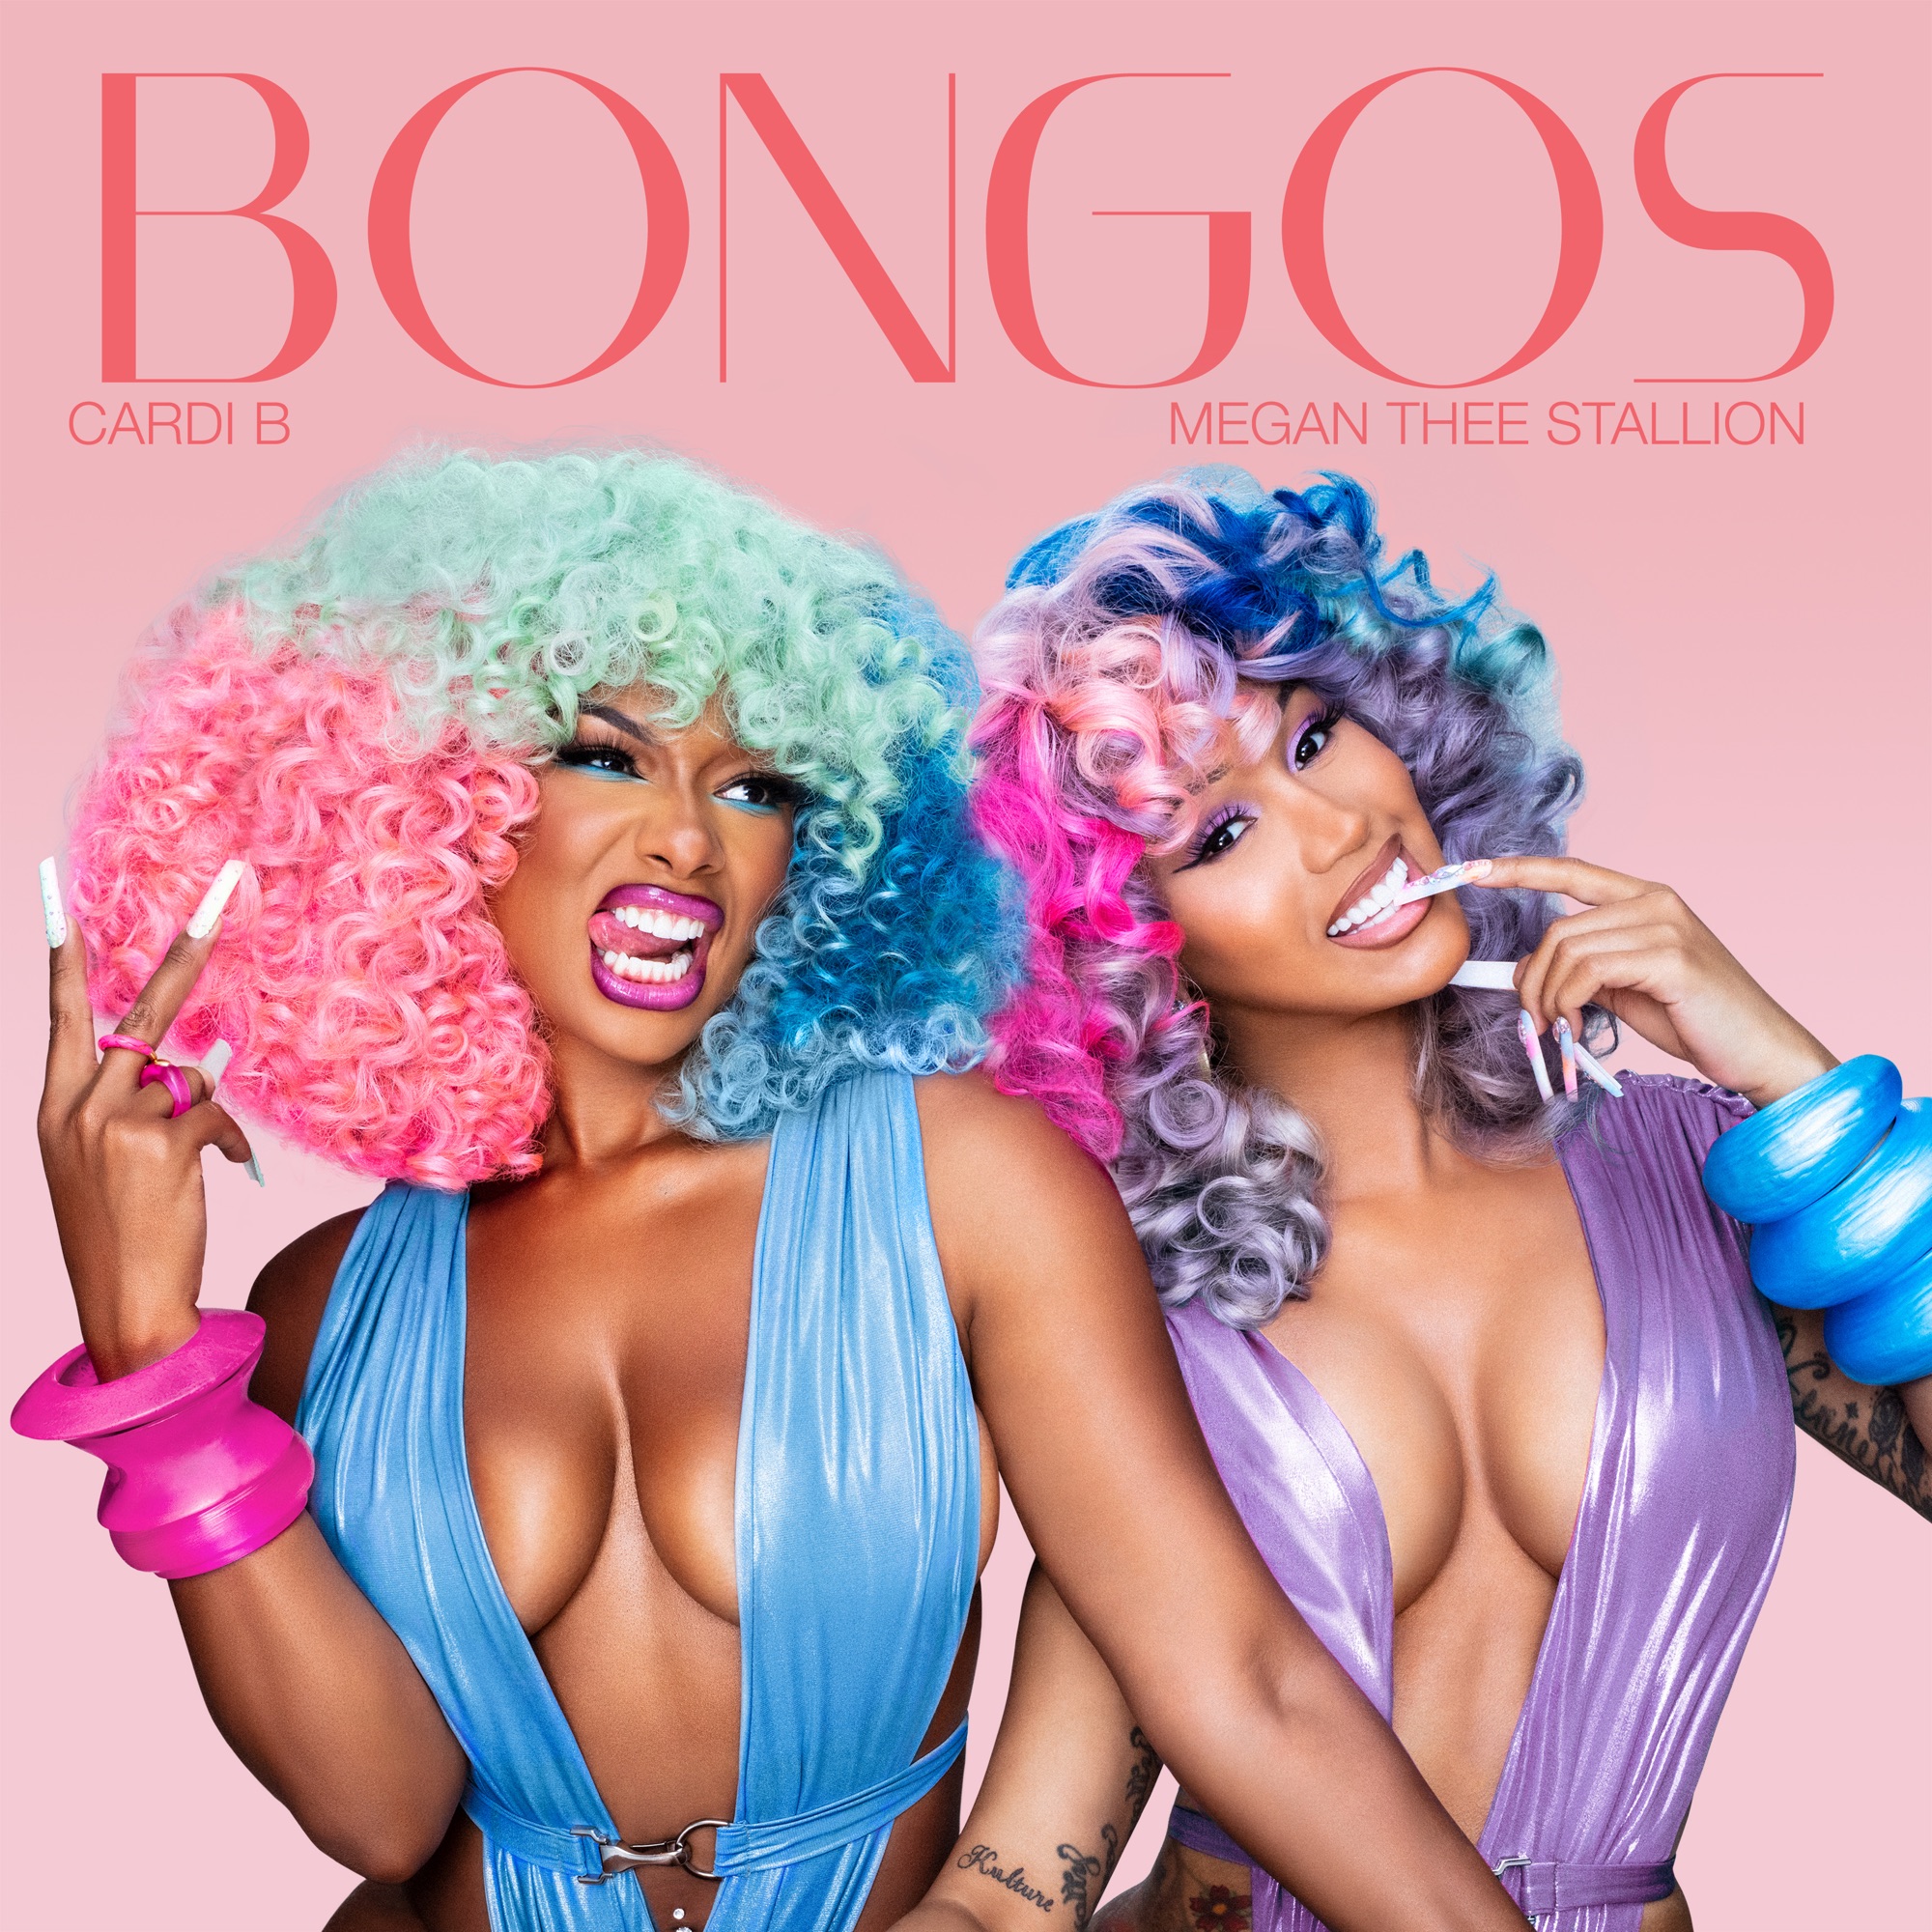 Cardi B & Megan Thee Stallion Bongos cover artwork